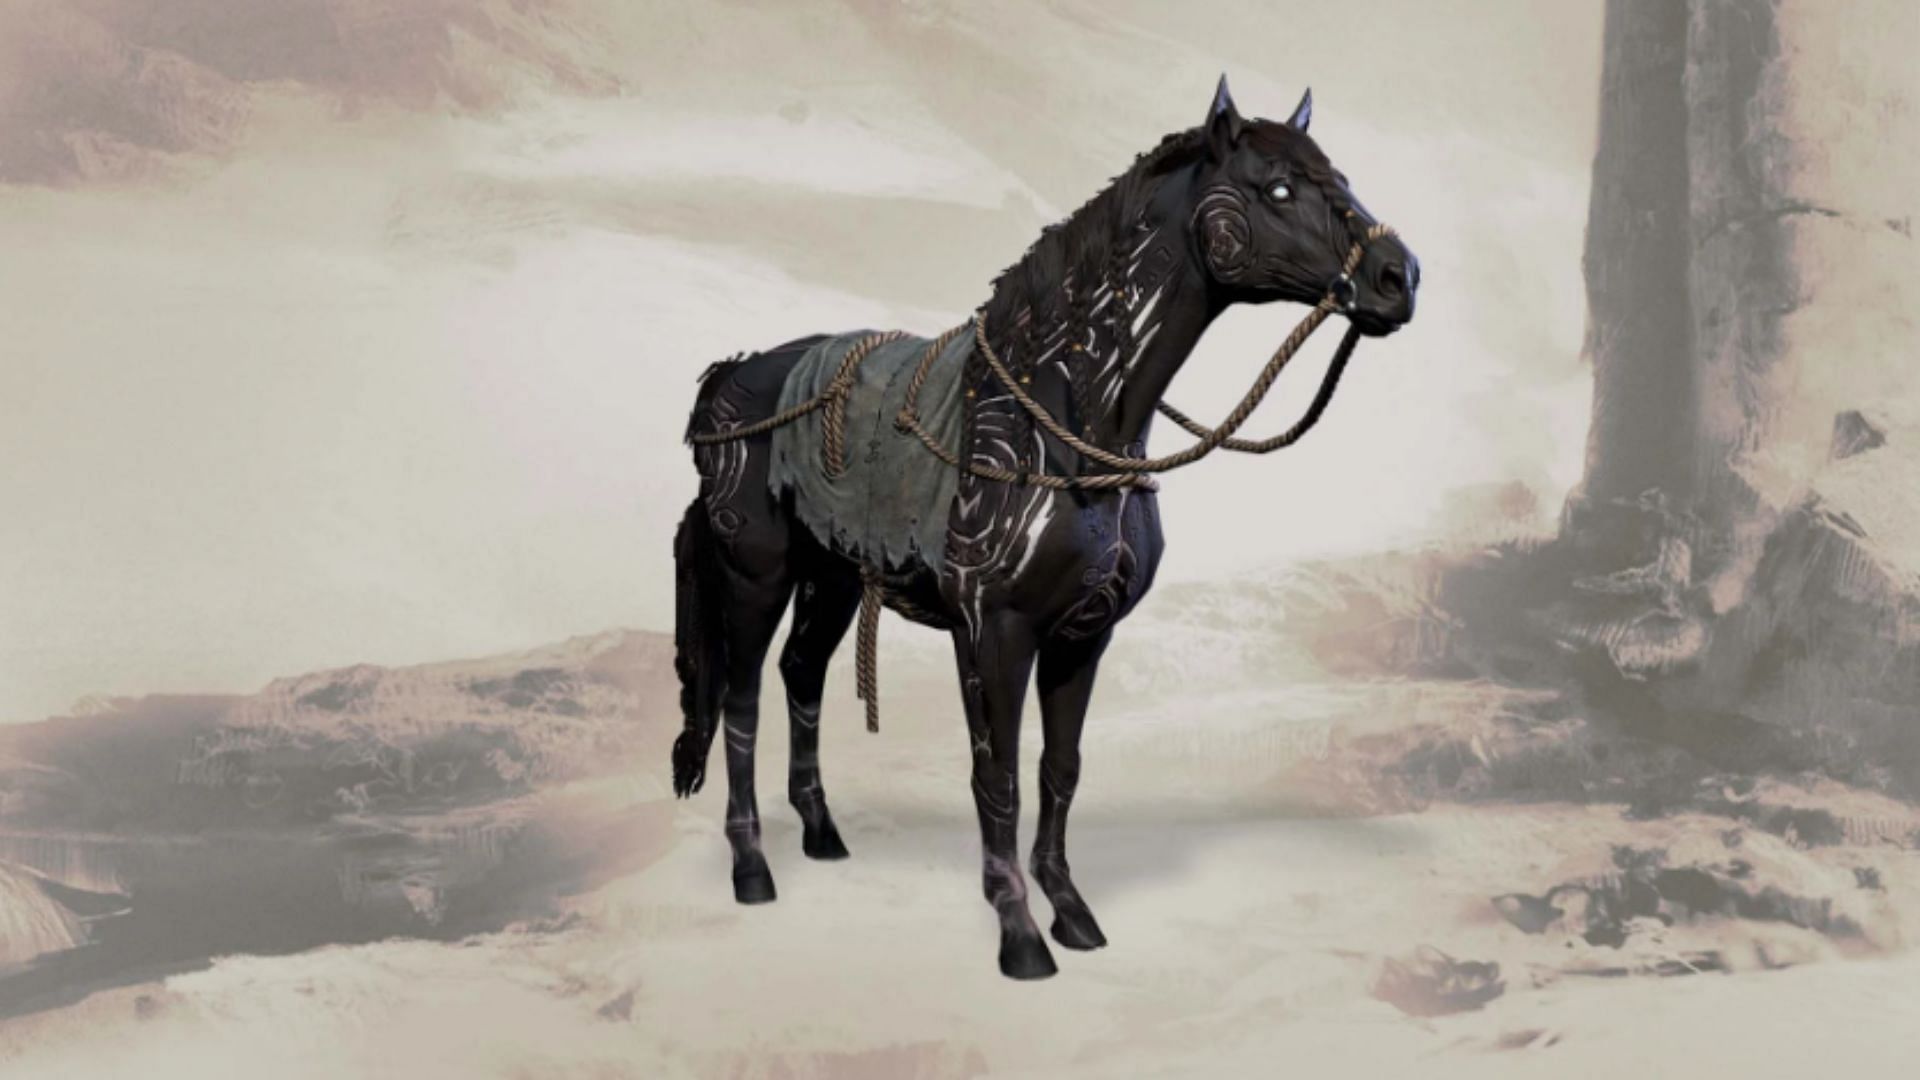 Awoken Warded Mustang (Image via Blizzard Entertainment)